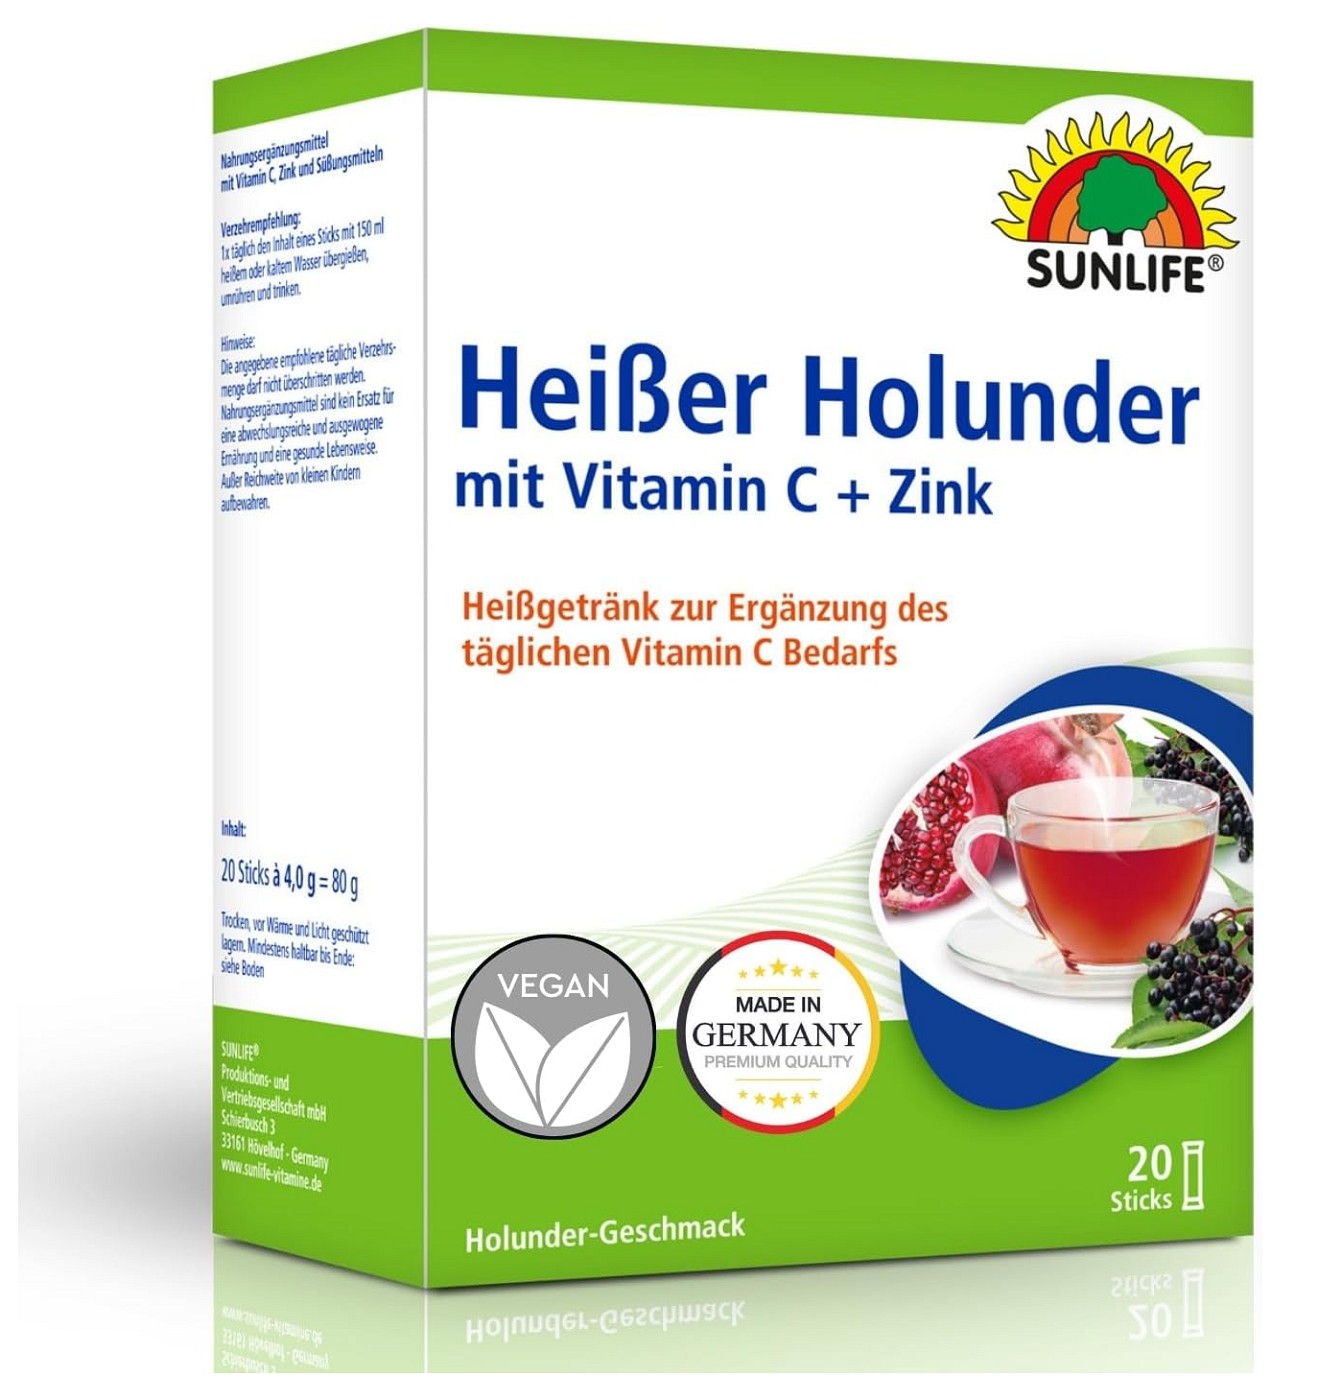 Sunlife Heißer Holunder + Granatapfel Sticks 20 Stück